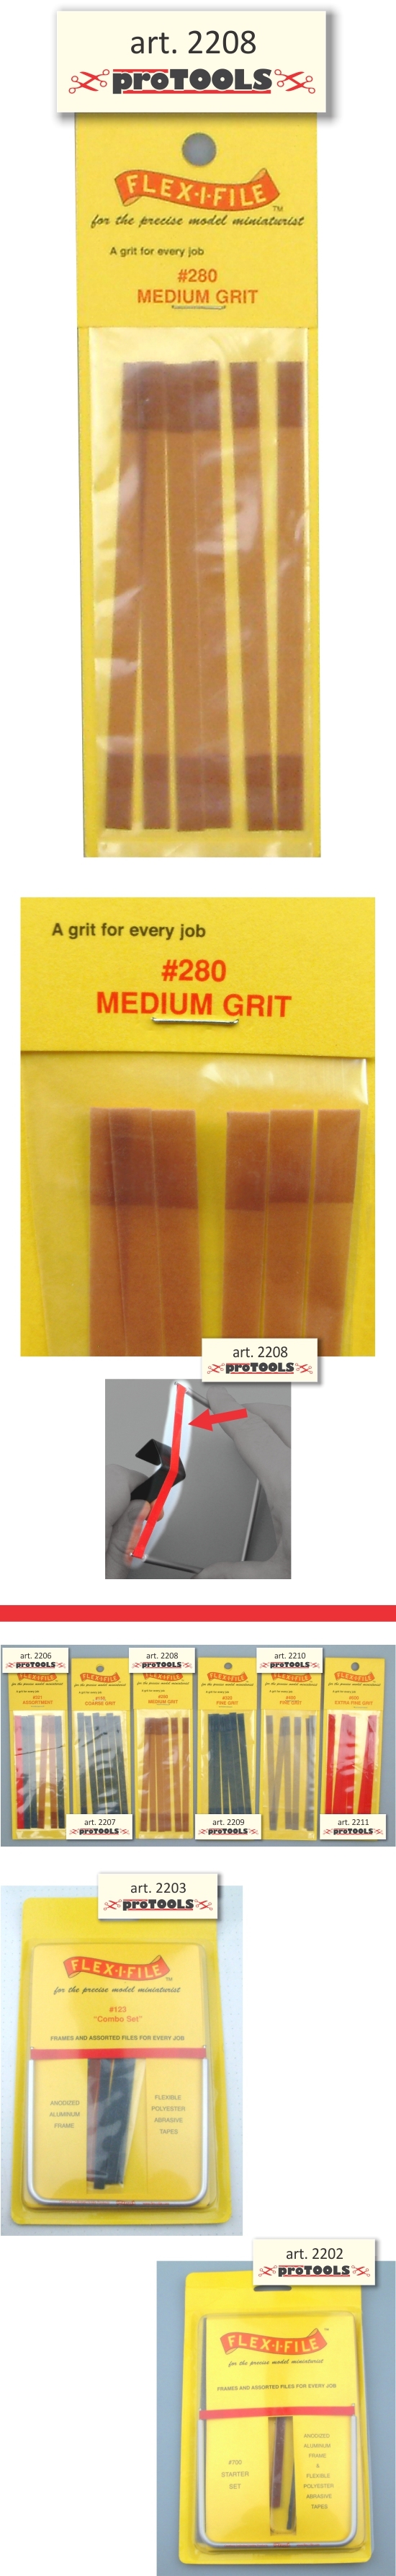 Flex-I-File Abrasive Tapes Refills #280 - Medium Gritt